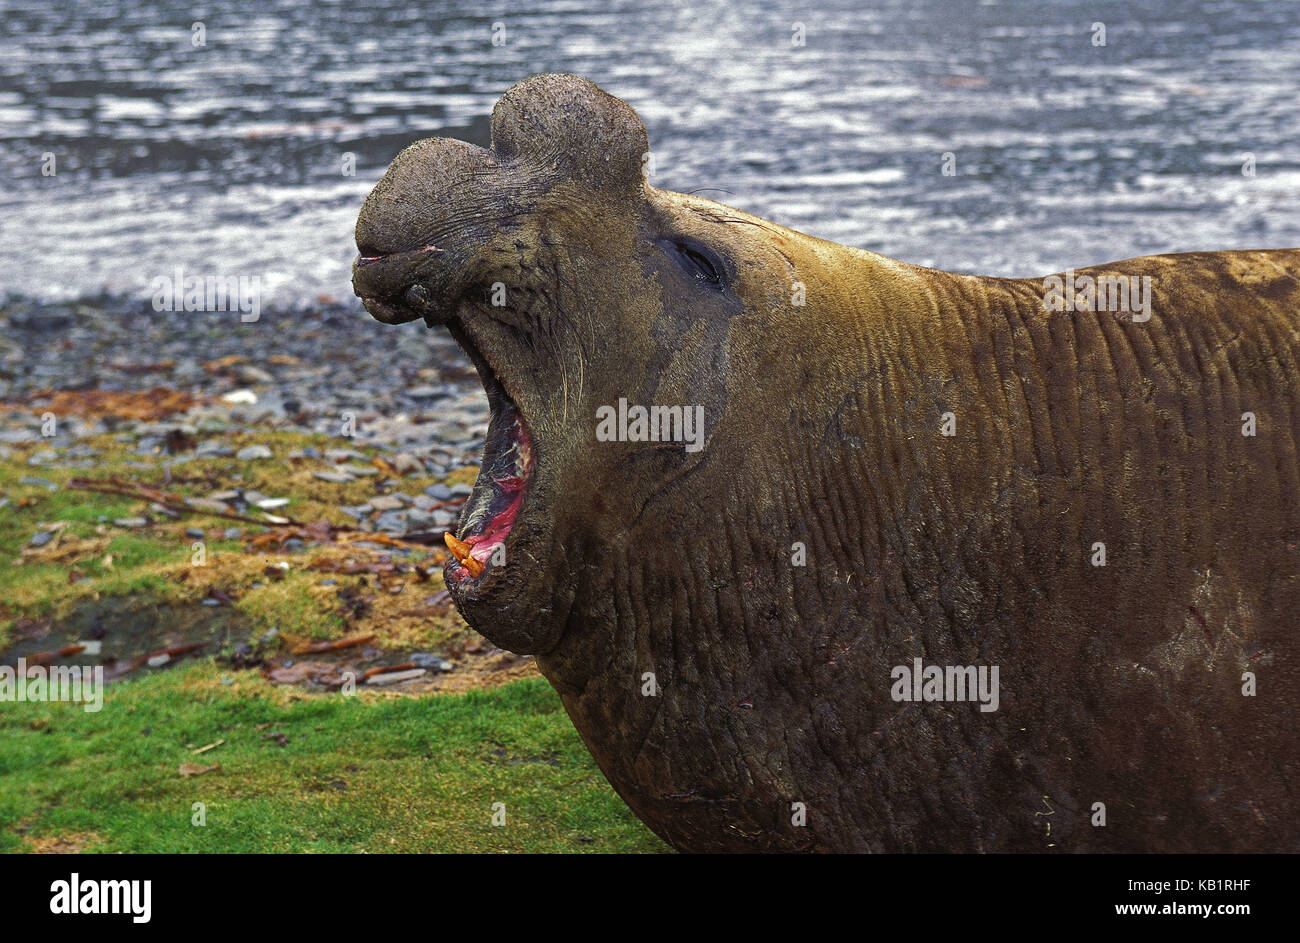 Elefantes marinos del sur, Mirounga leonina, poco hombres, playa, mentira, ROAR, Antártida, Foto de stock